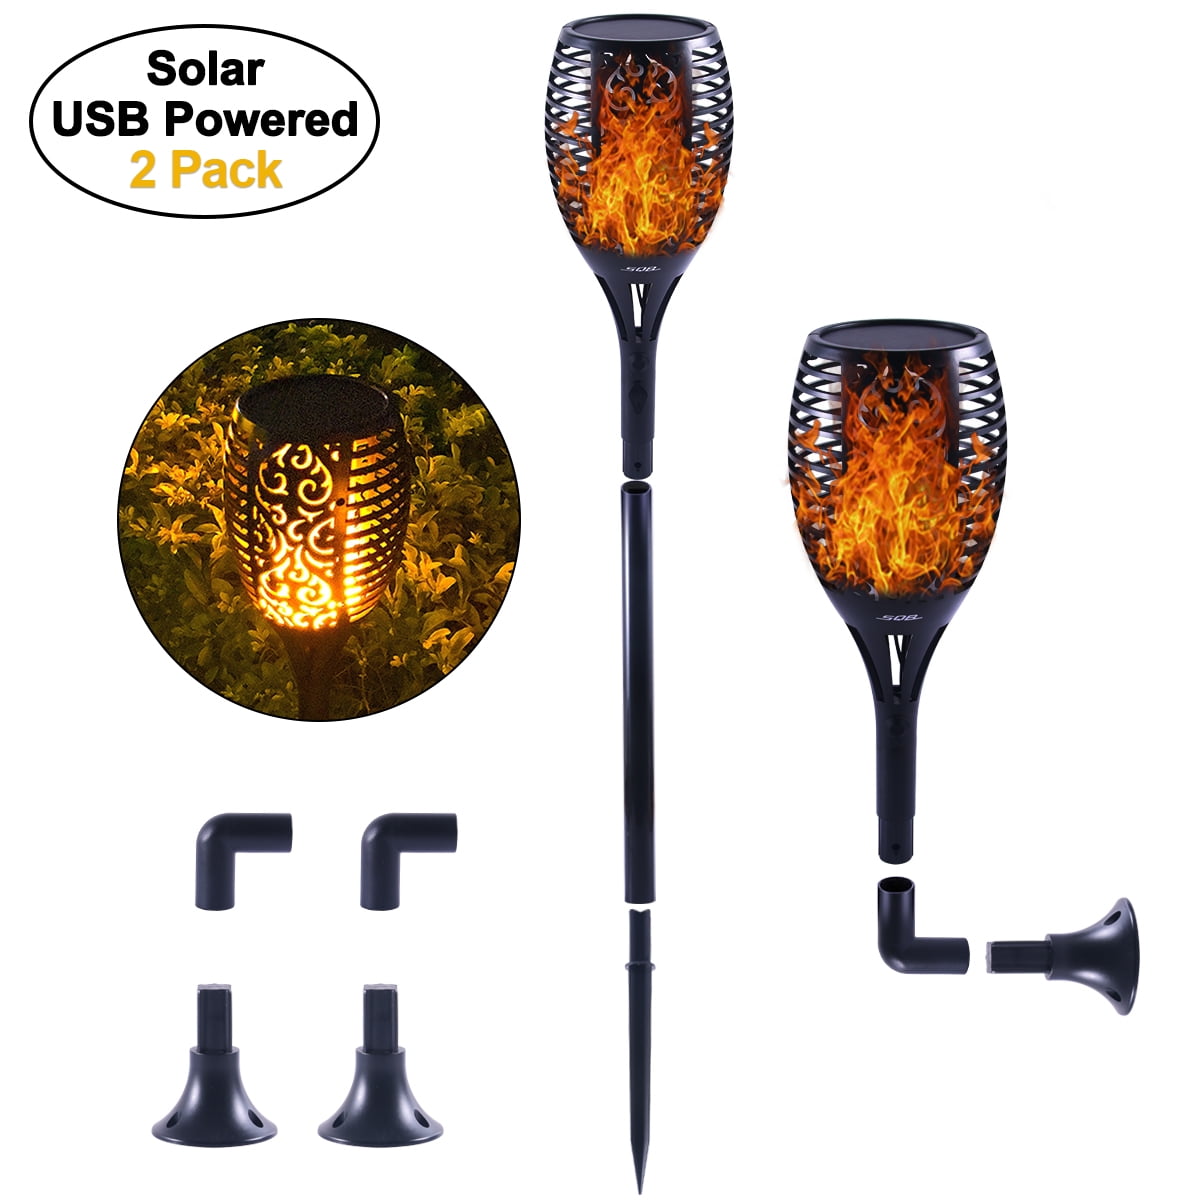 96 LED Waterproof Solar Tiki Torch Light Dance Flickering Flame Lamp 1Pair 